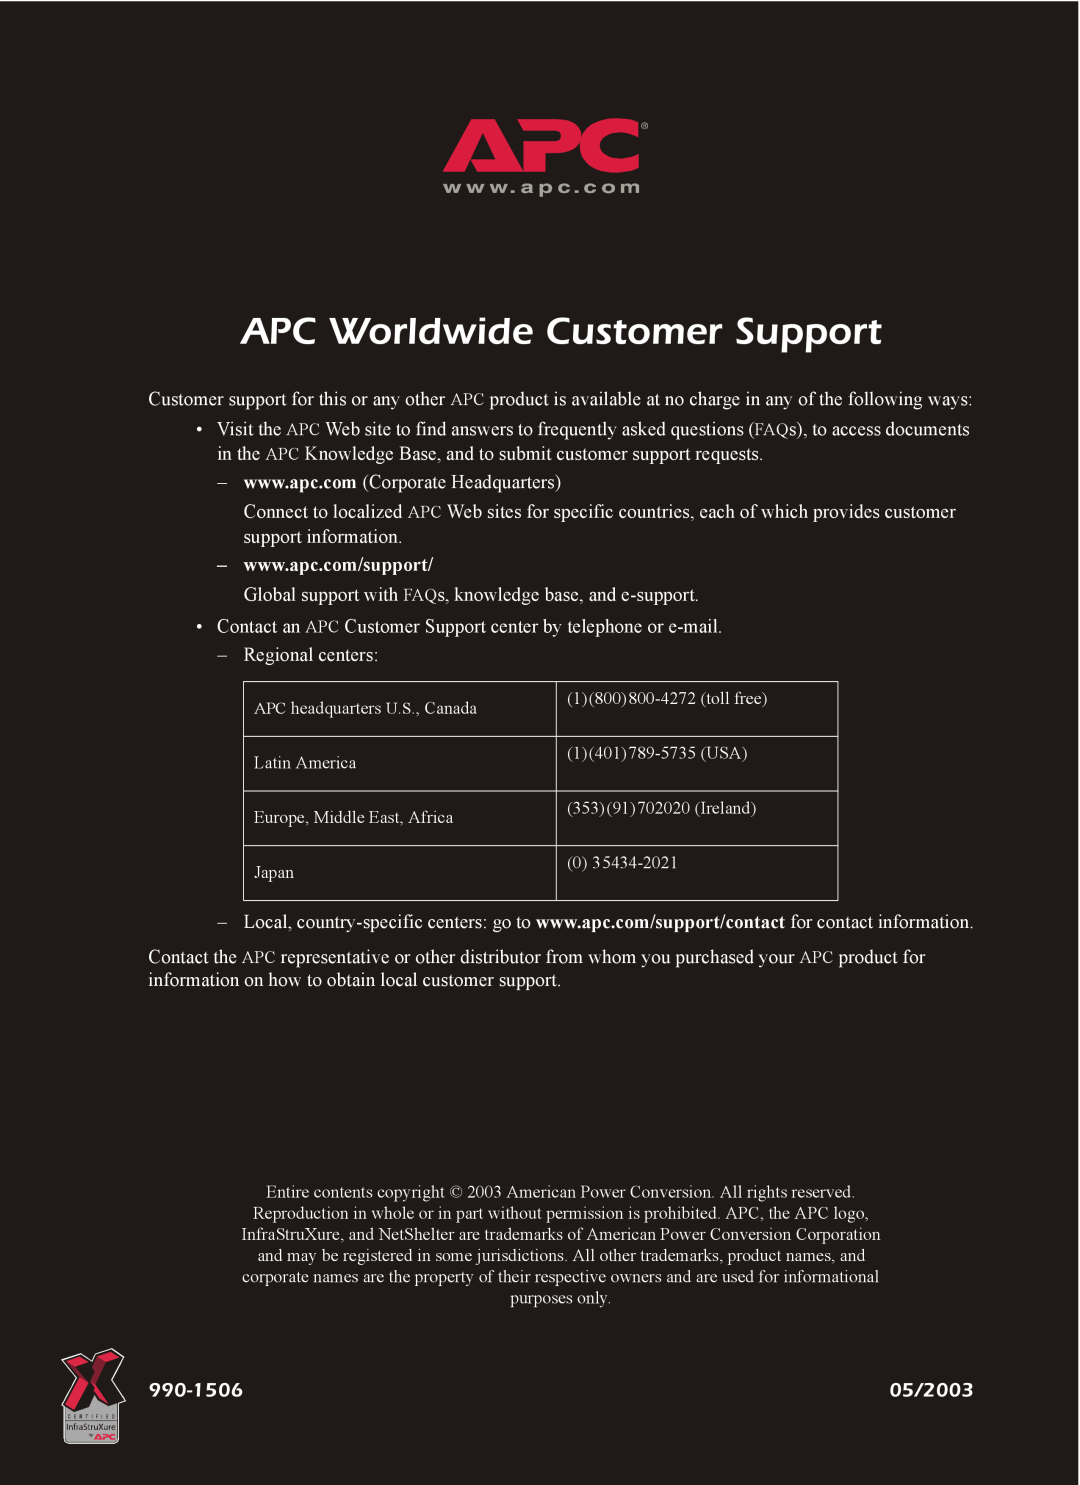 American Power Conversion AP7608, AP7602, AP7601 operation manual APC Worldwide Customer Support, 990-1506, 05/2003 